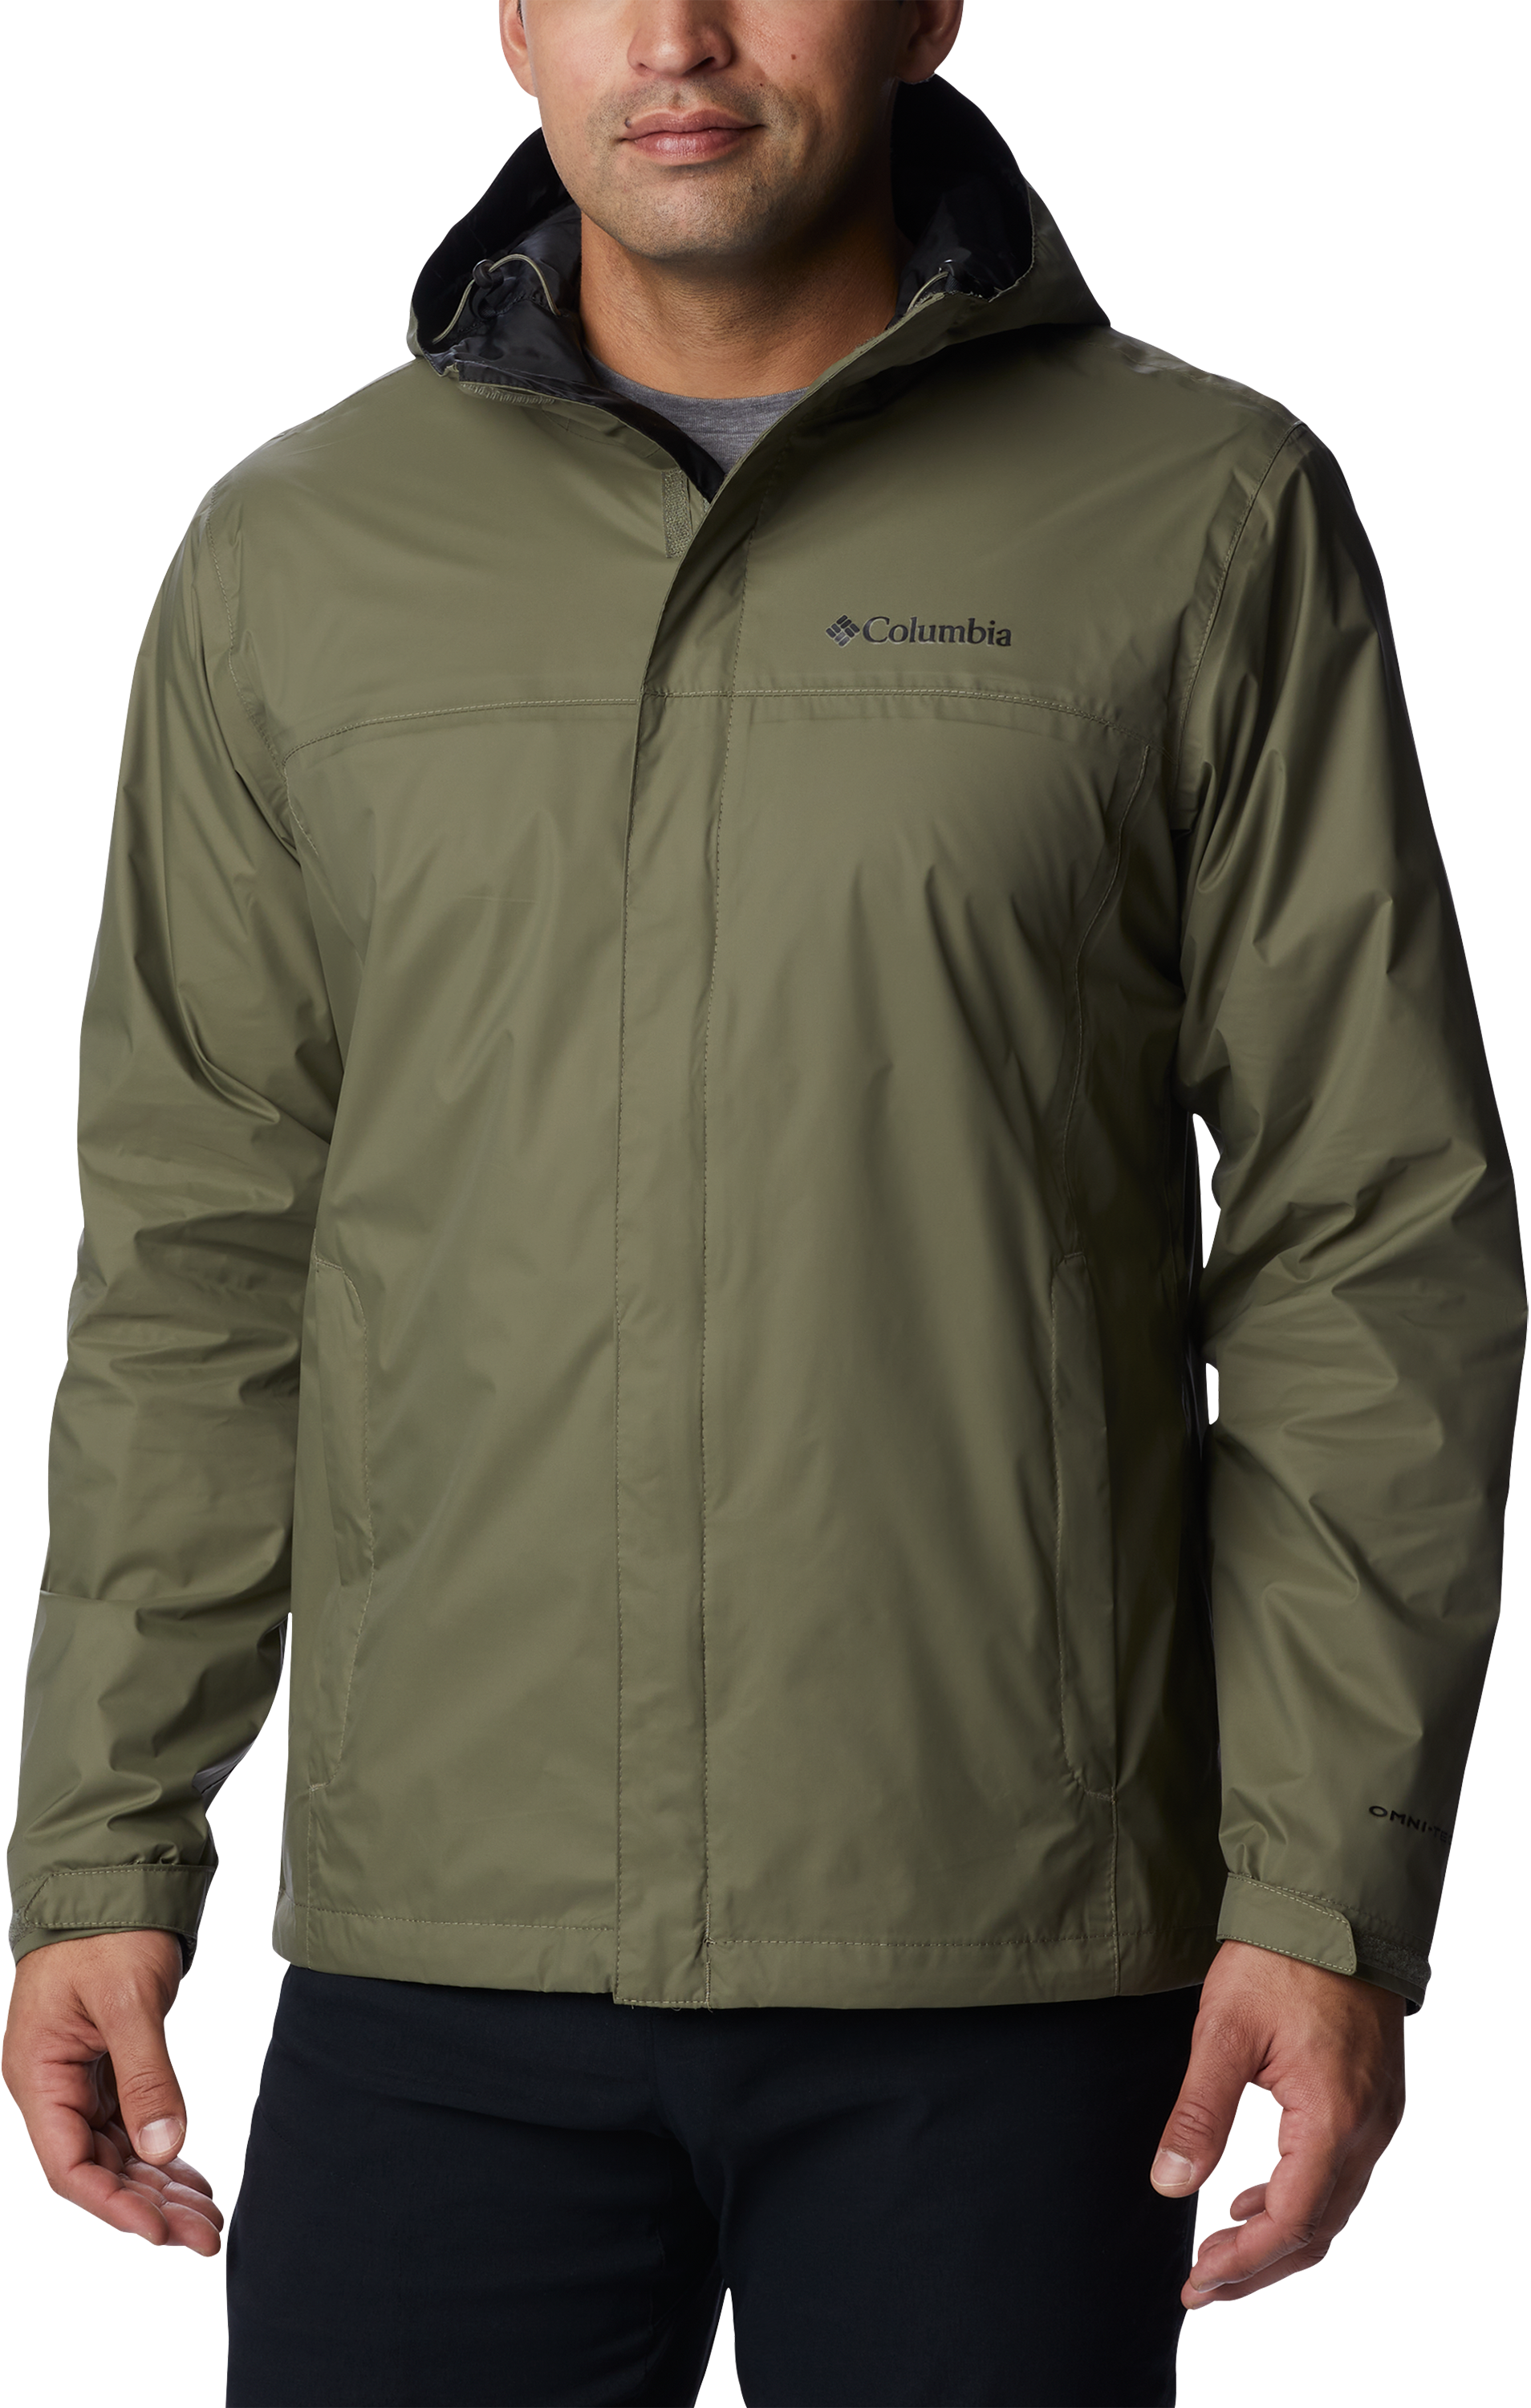 Columbia Watertight II Jacket for Men - Stone Green - 2XL